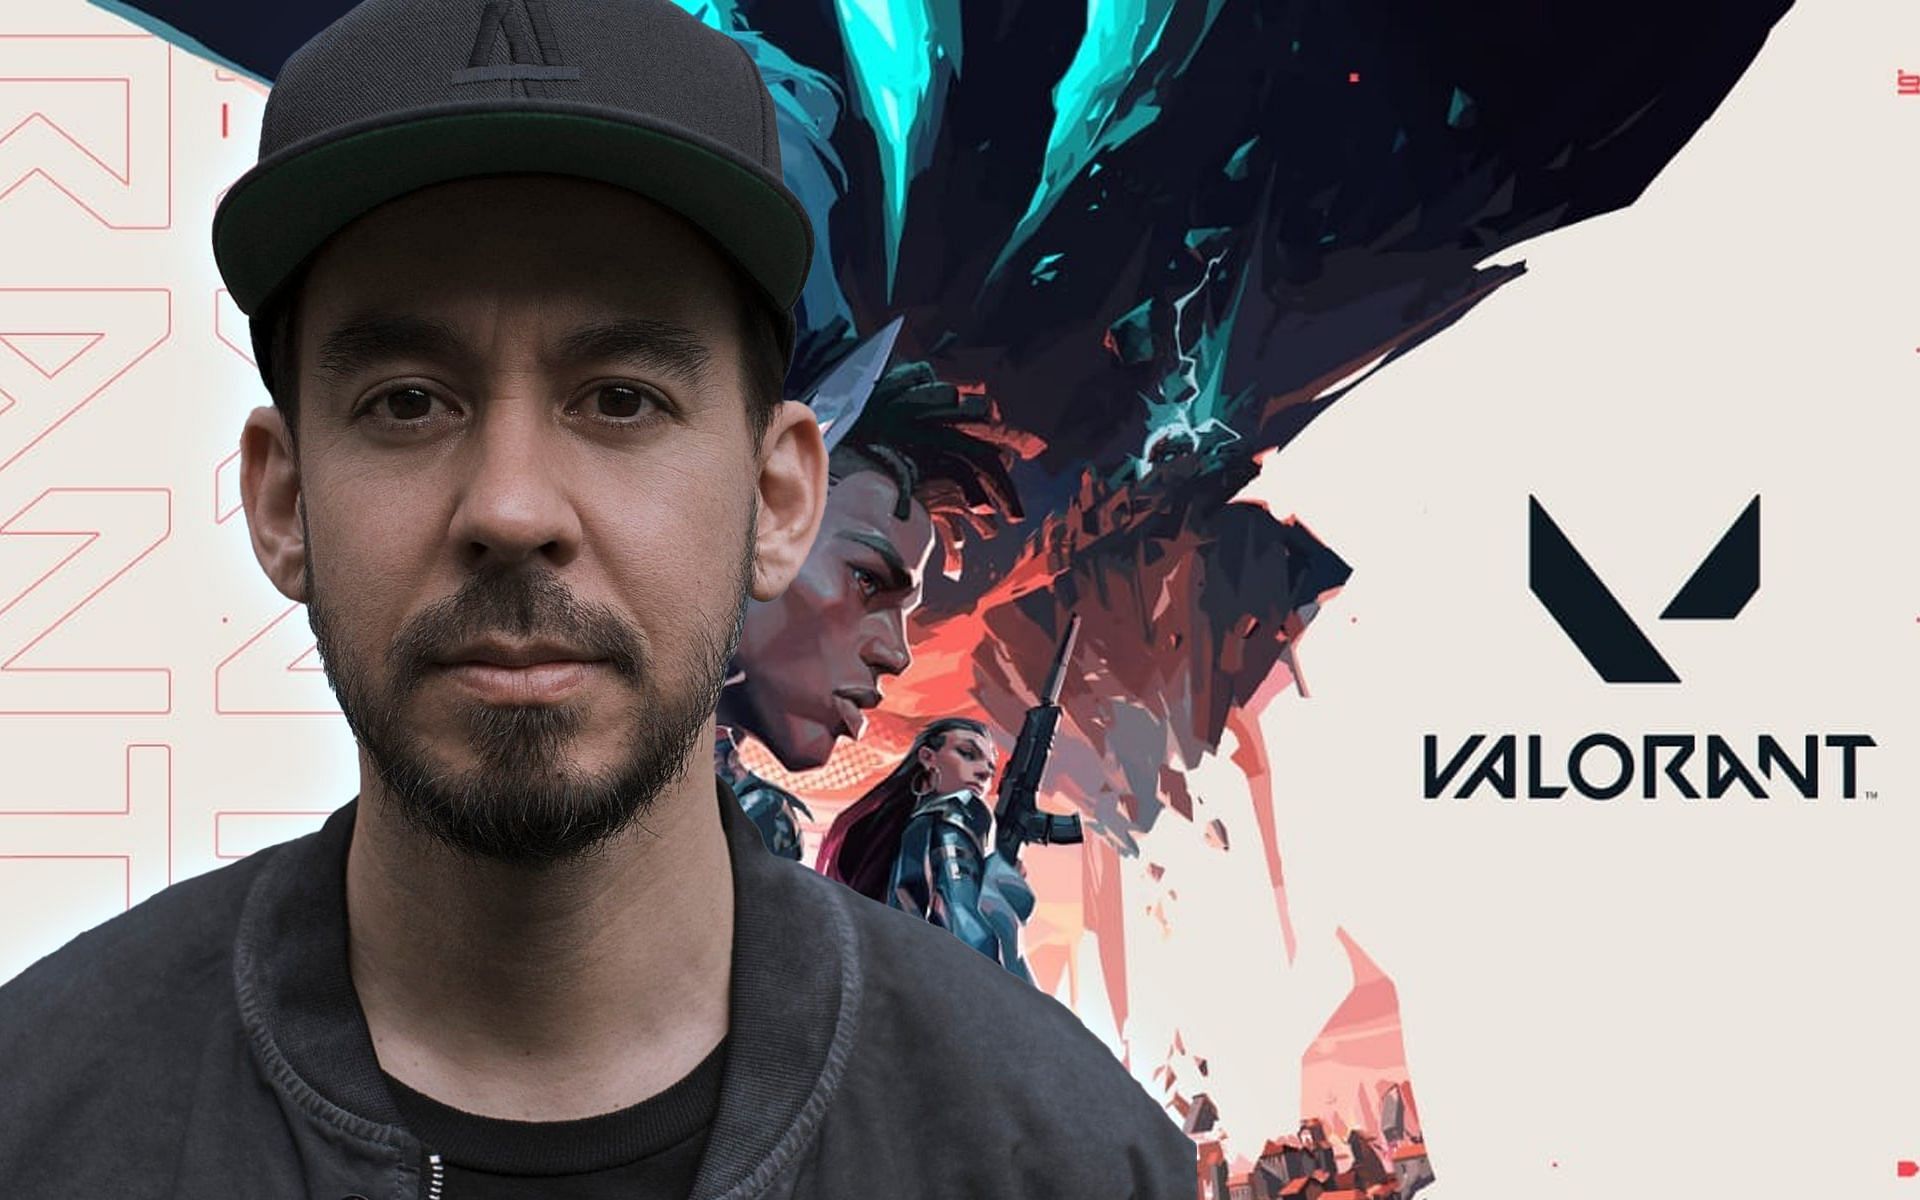 Mike Shinoda claims to be a Valorant fan (Image via Sportskeeda)